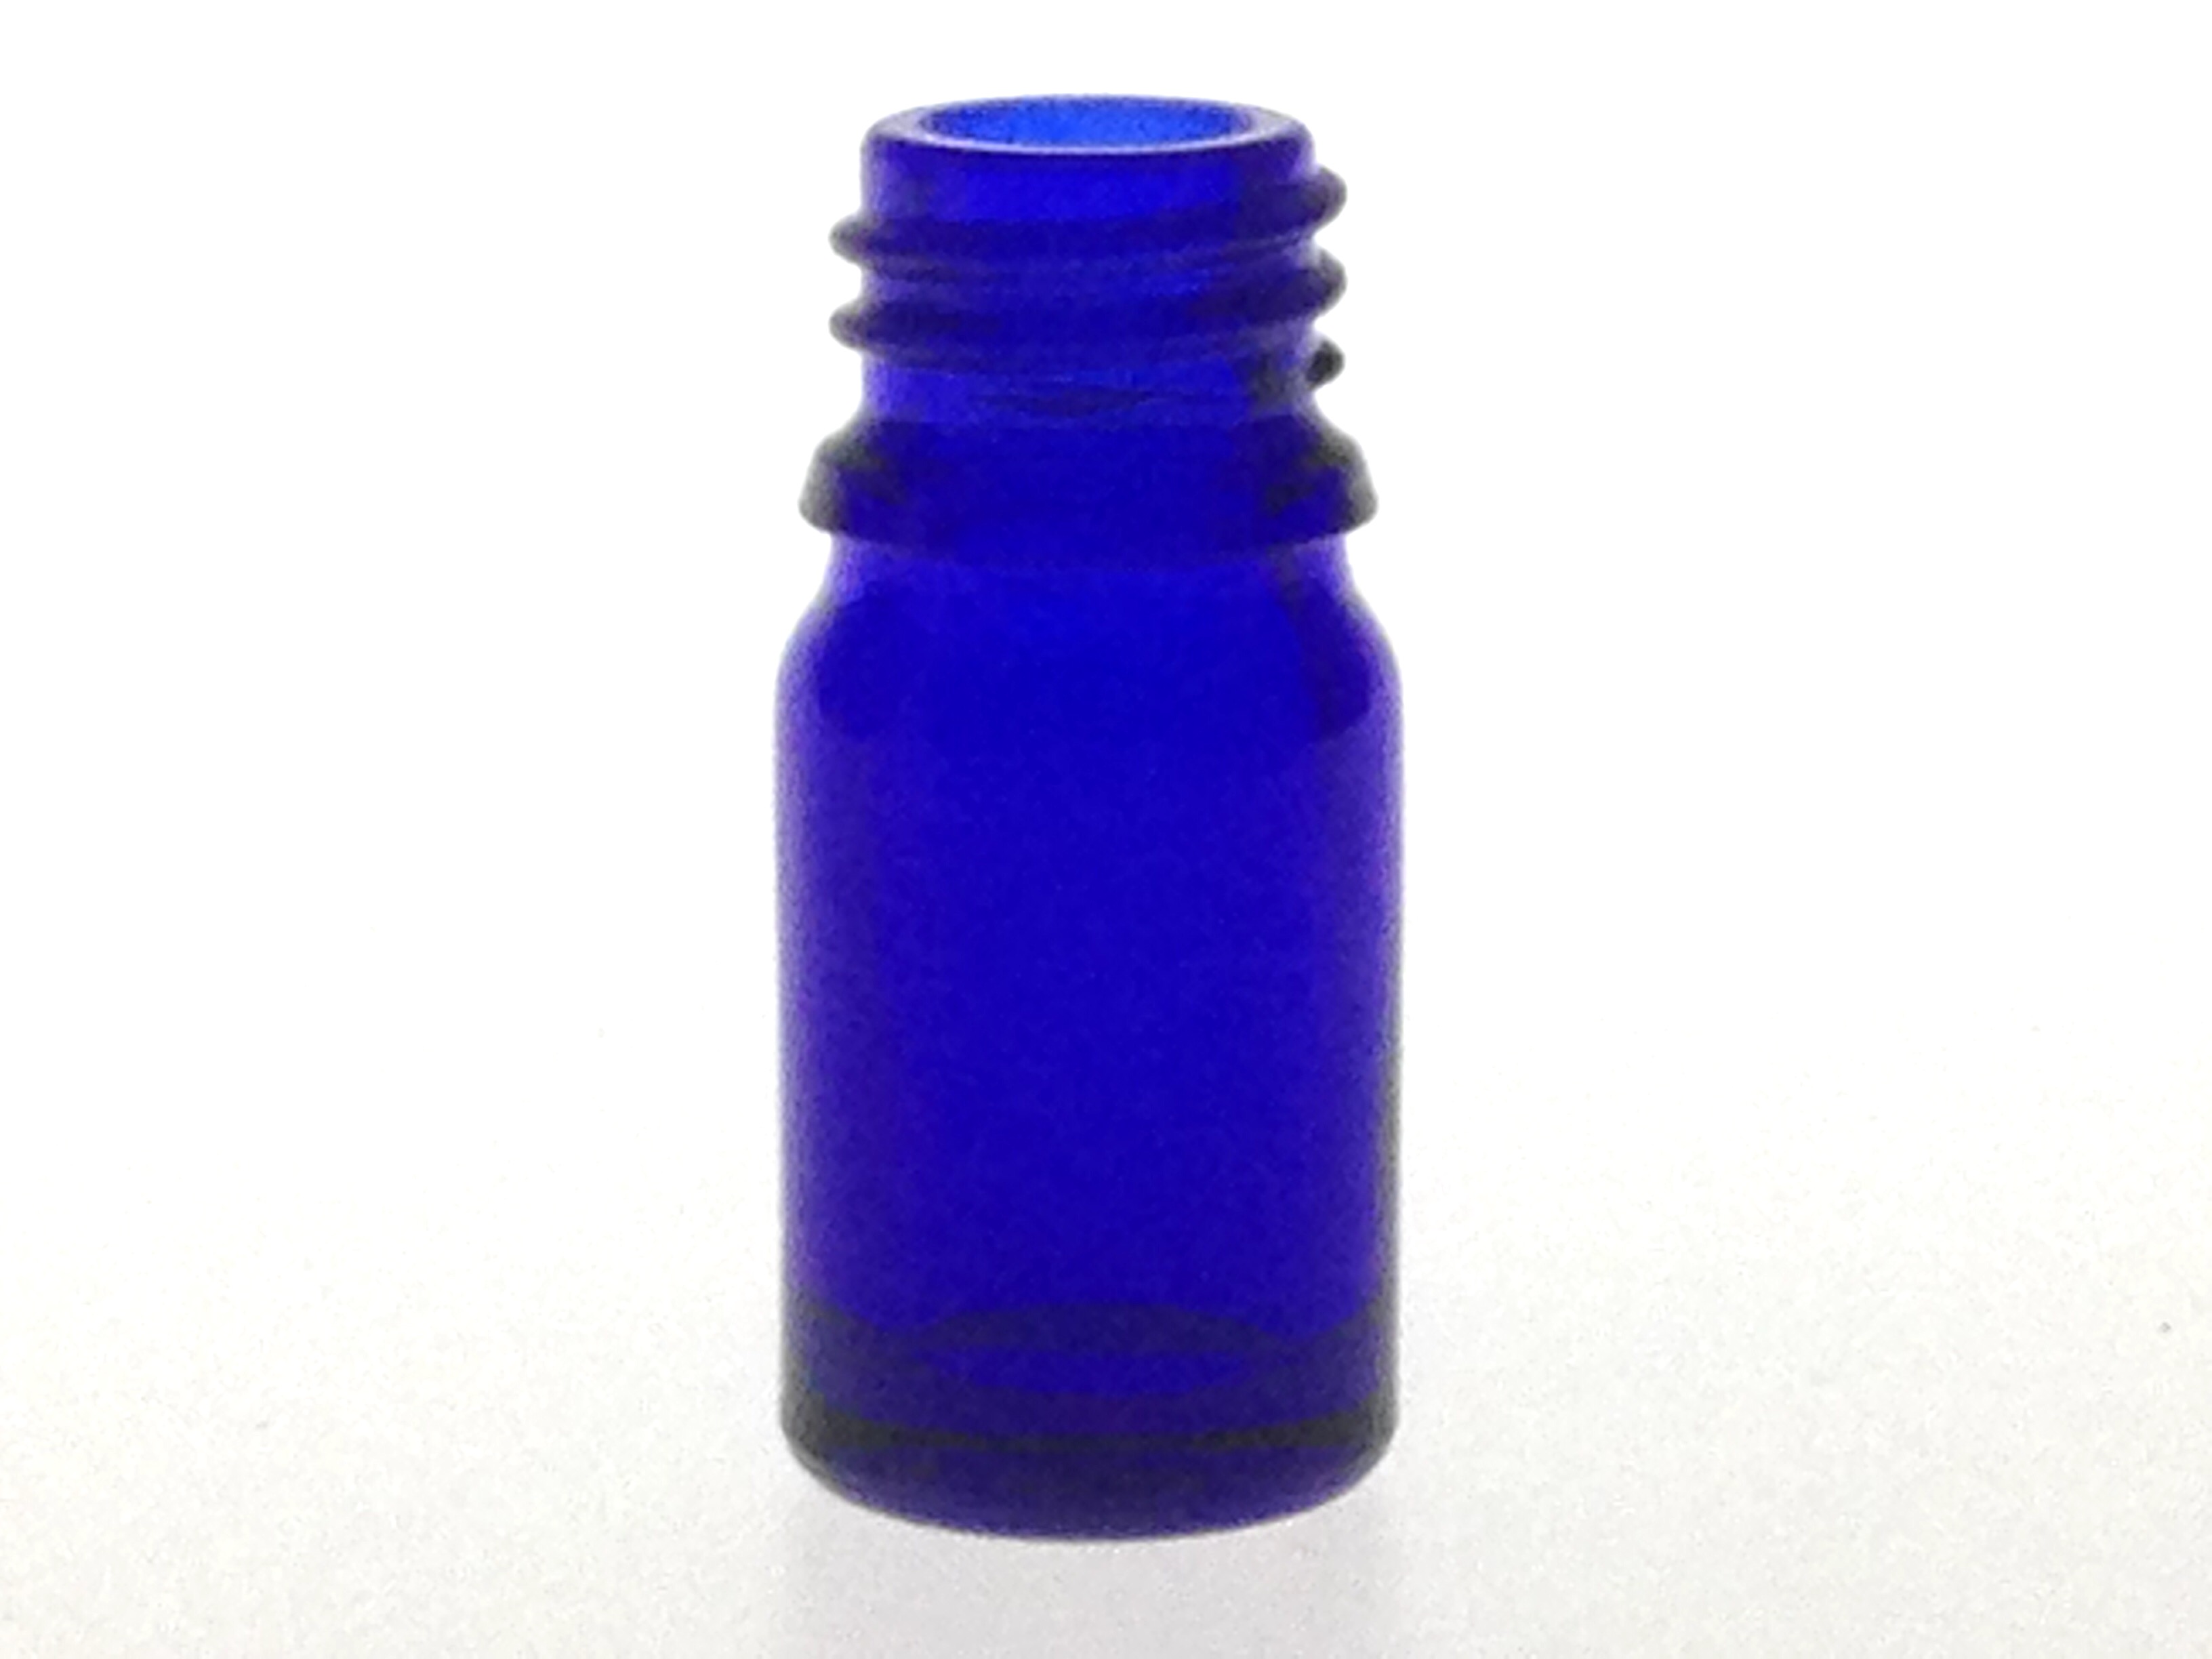 DROPPER ROUND BOTTLE BLUE GLASS 5 ML